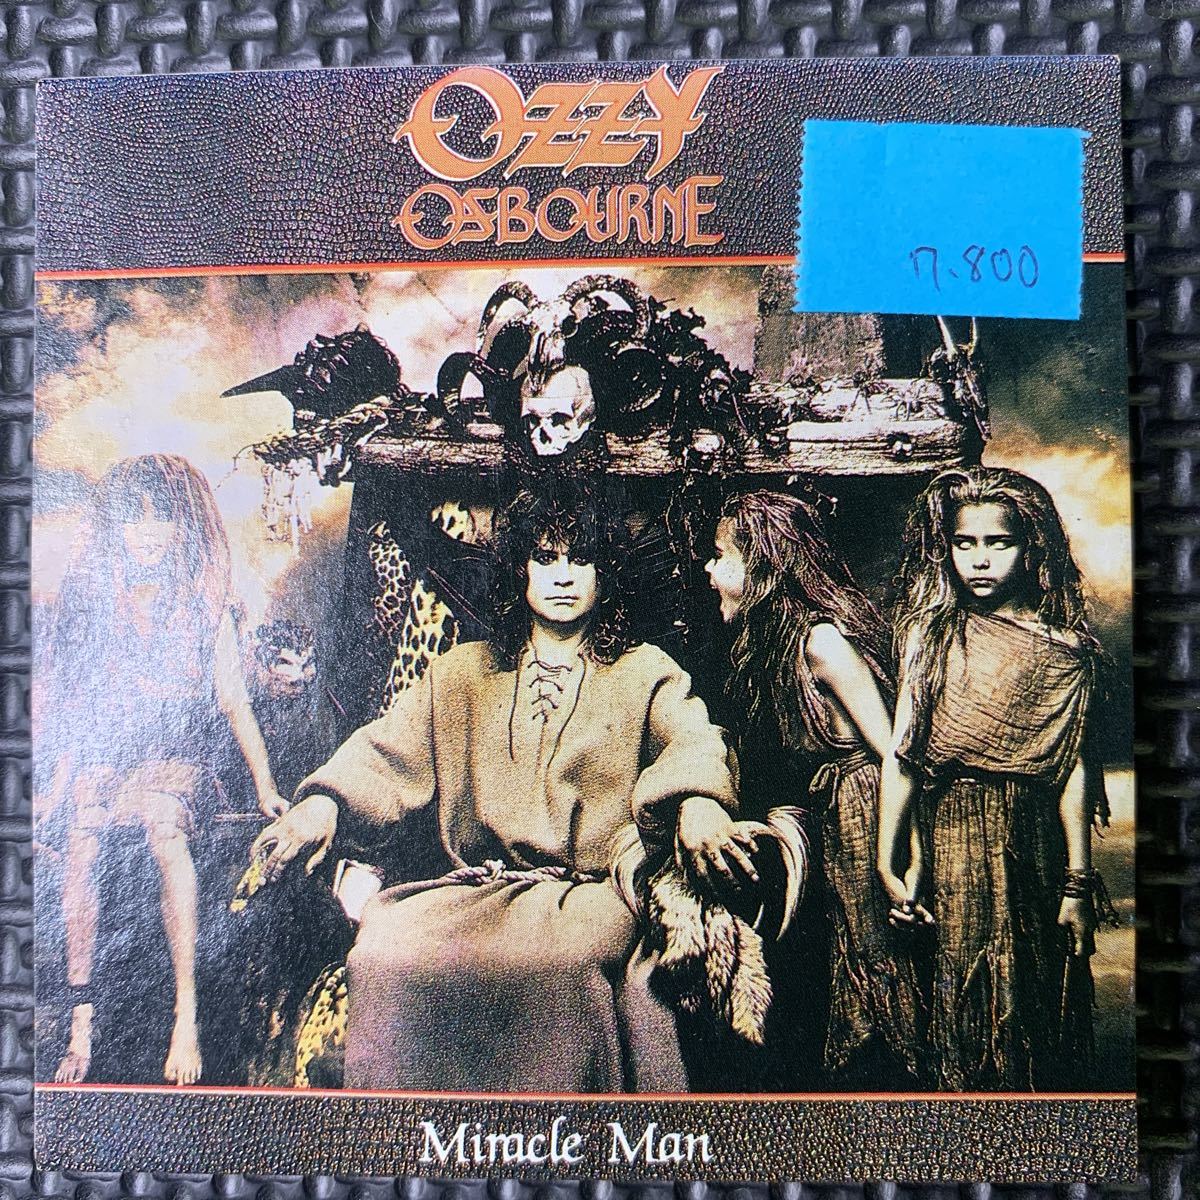 CD・Single・見本盤・シングル・廃盤・Ozzy Osbourne・Miracle Man・オジー・オズボーン・CBS/Sony・10EP-3051・Rock・ロック・洋楽_画像1